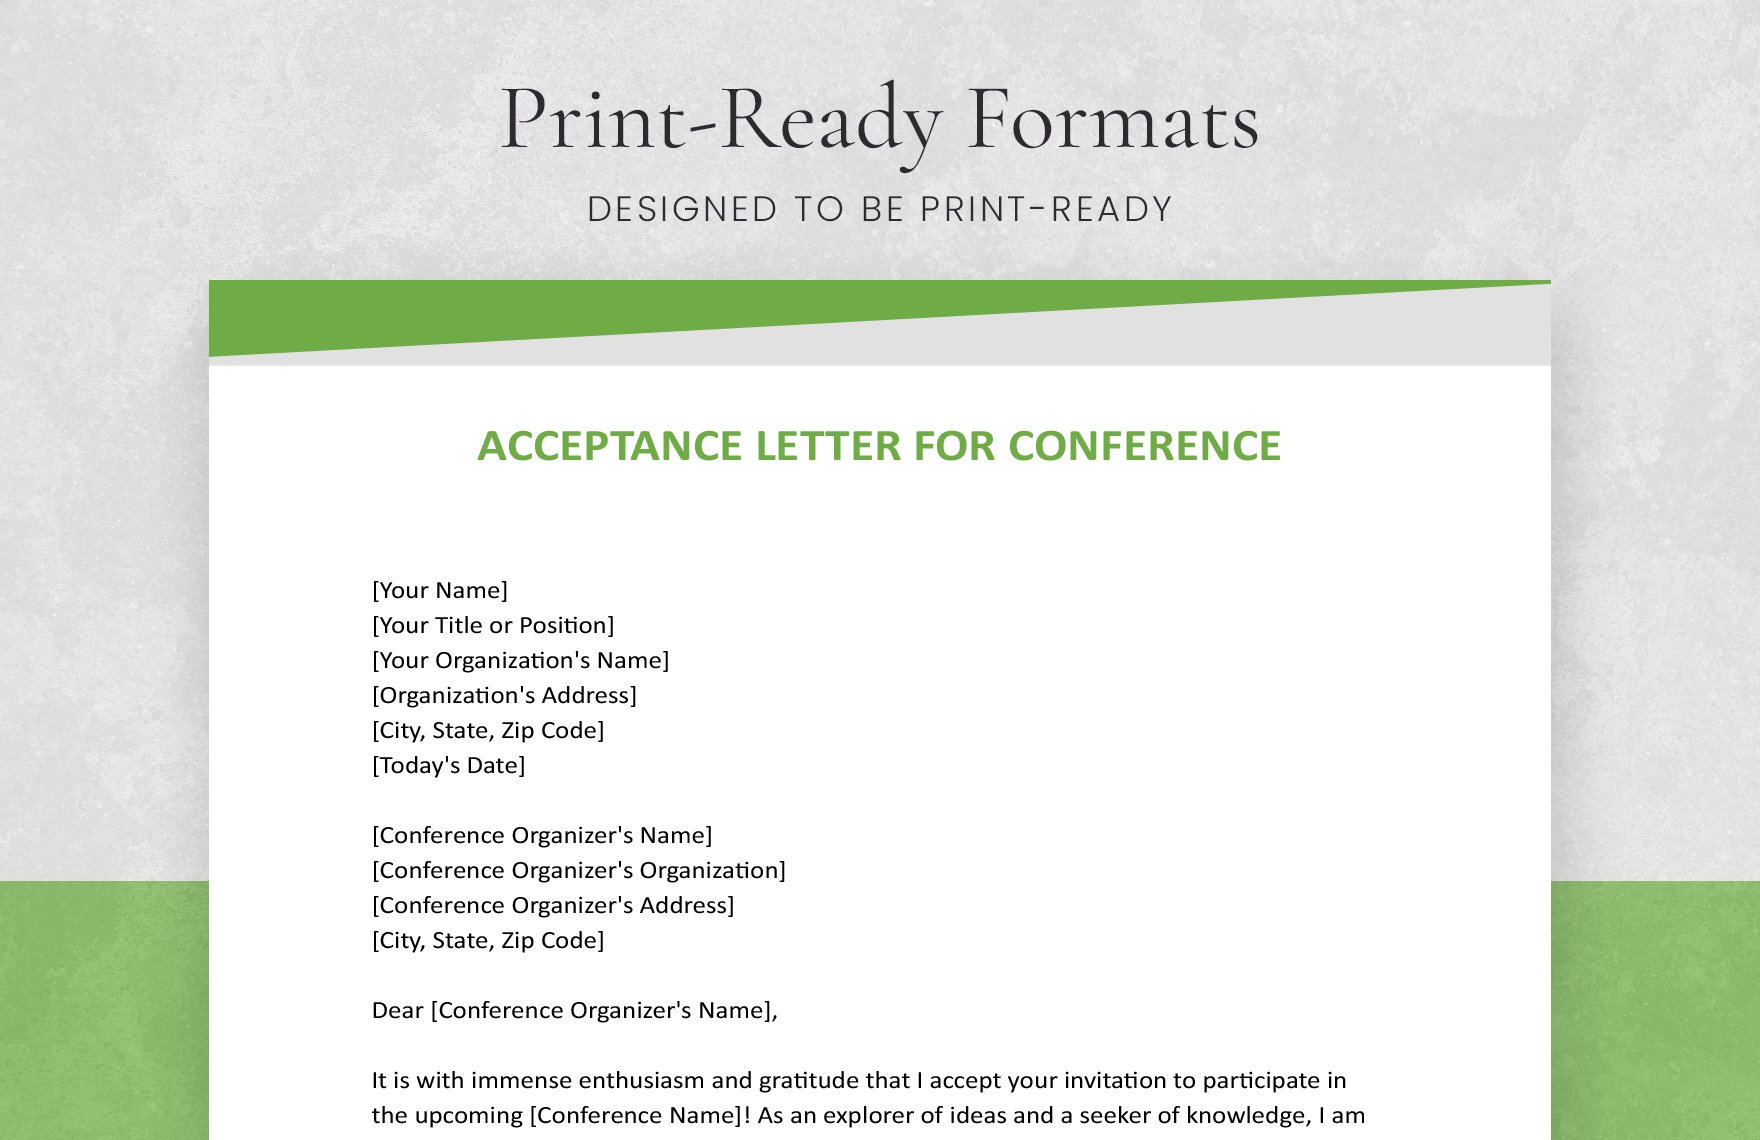 Acceptance Letter For Conference